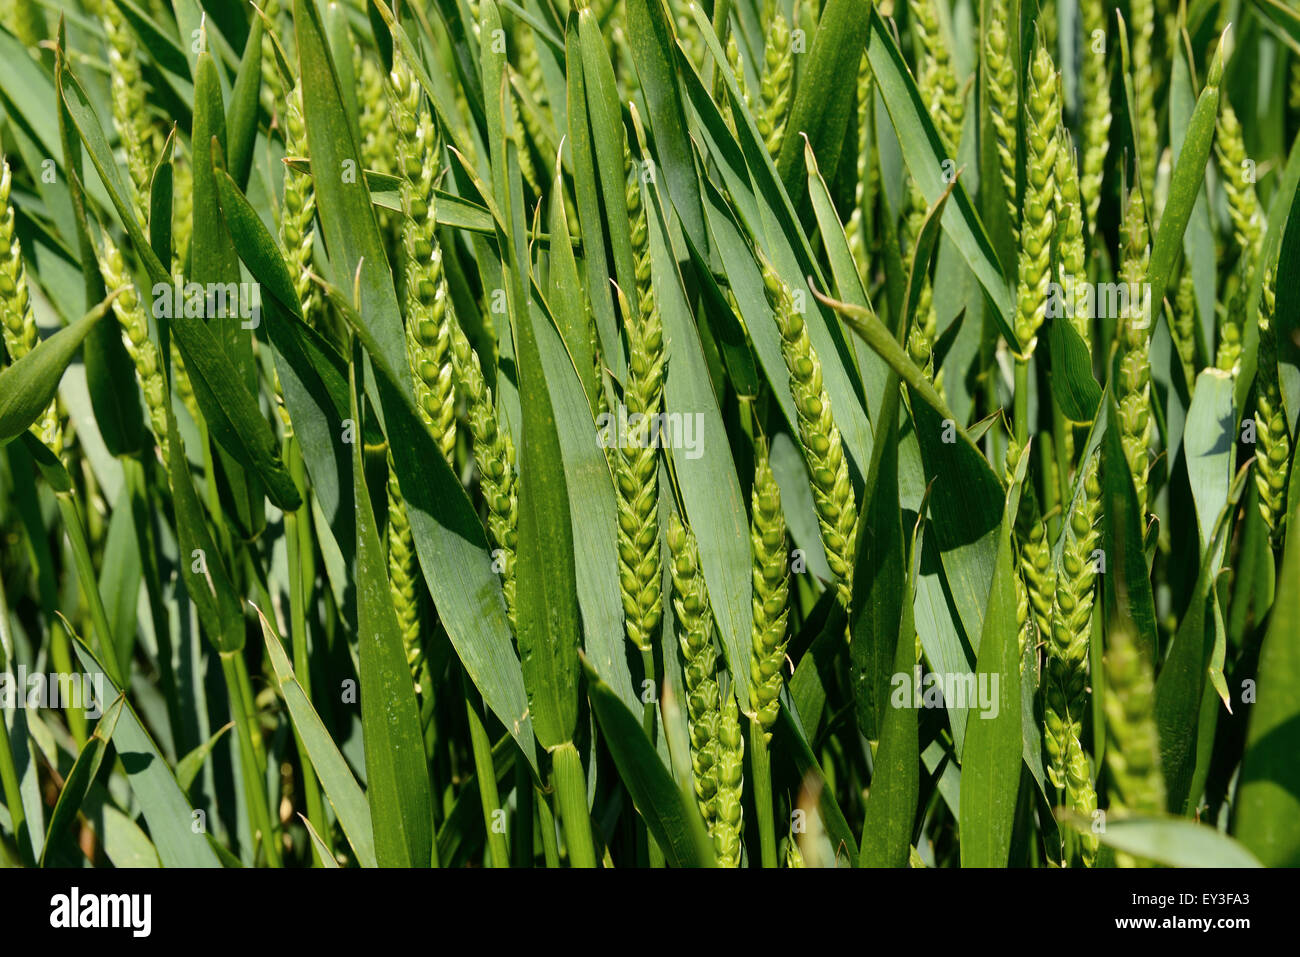 Winter wheat crop in unripe green flowering ear stage 60, Berkshire, UK, June Stock Photo